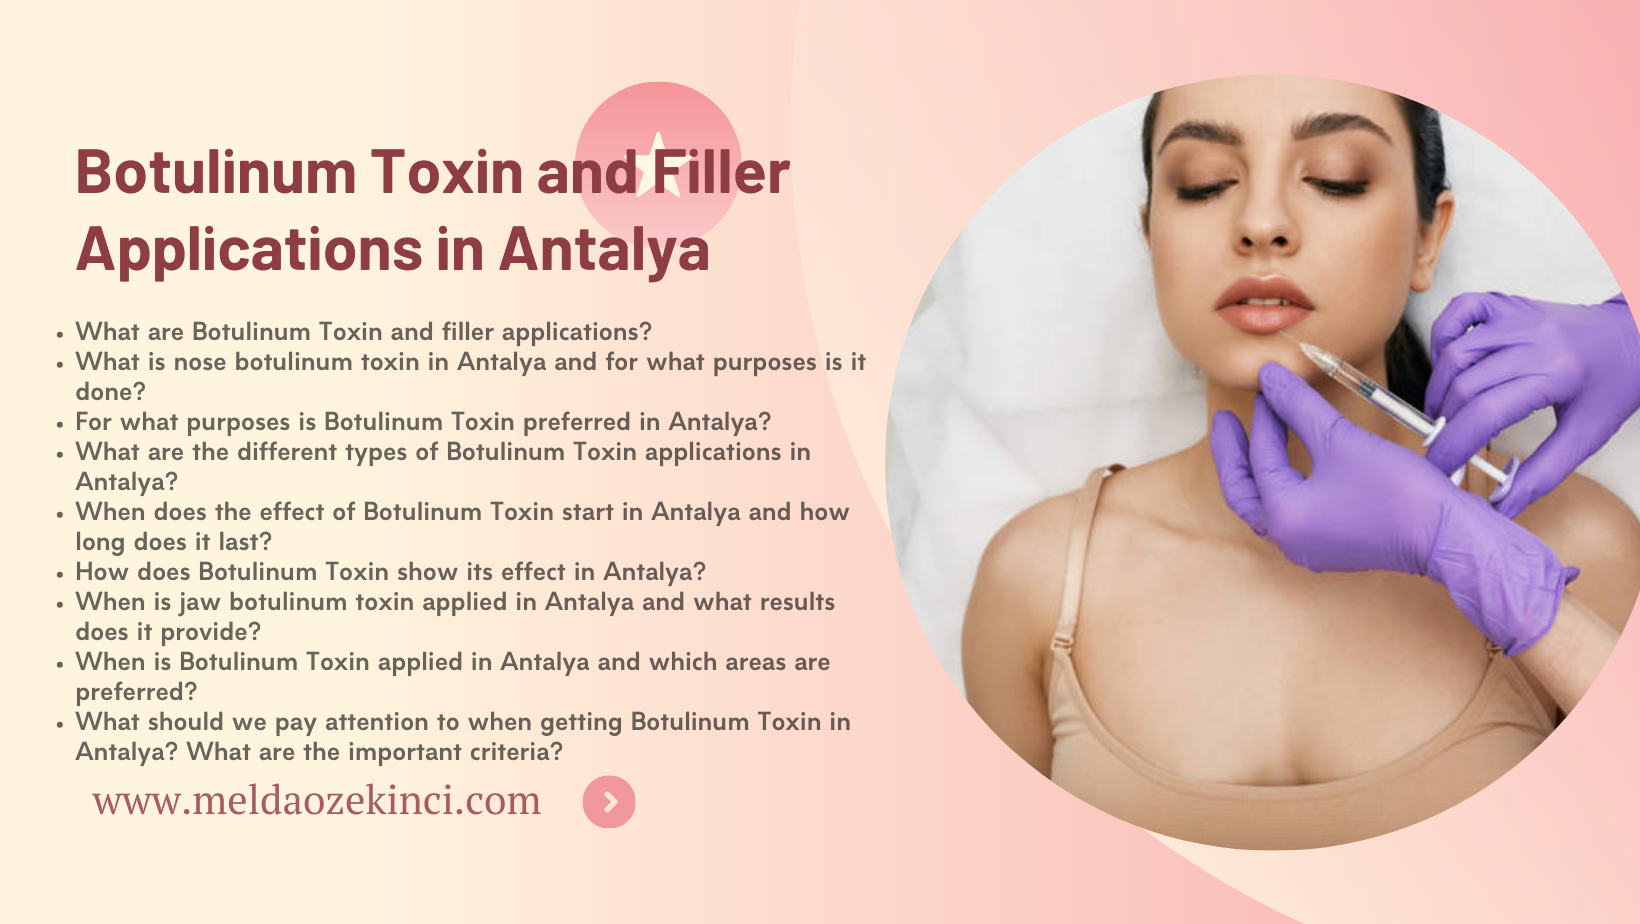 Botulinum Toxin and Filler Applications in Antalya